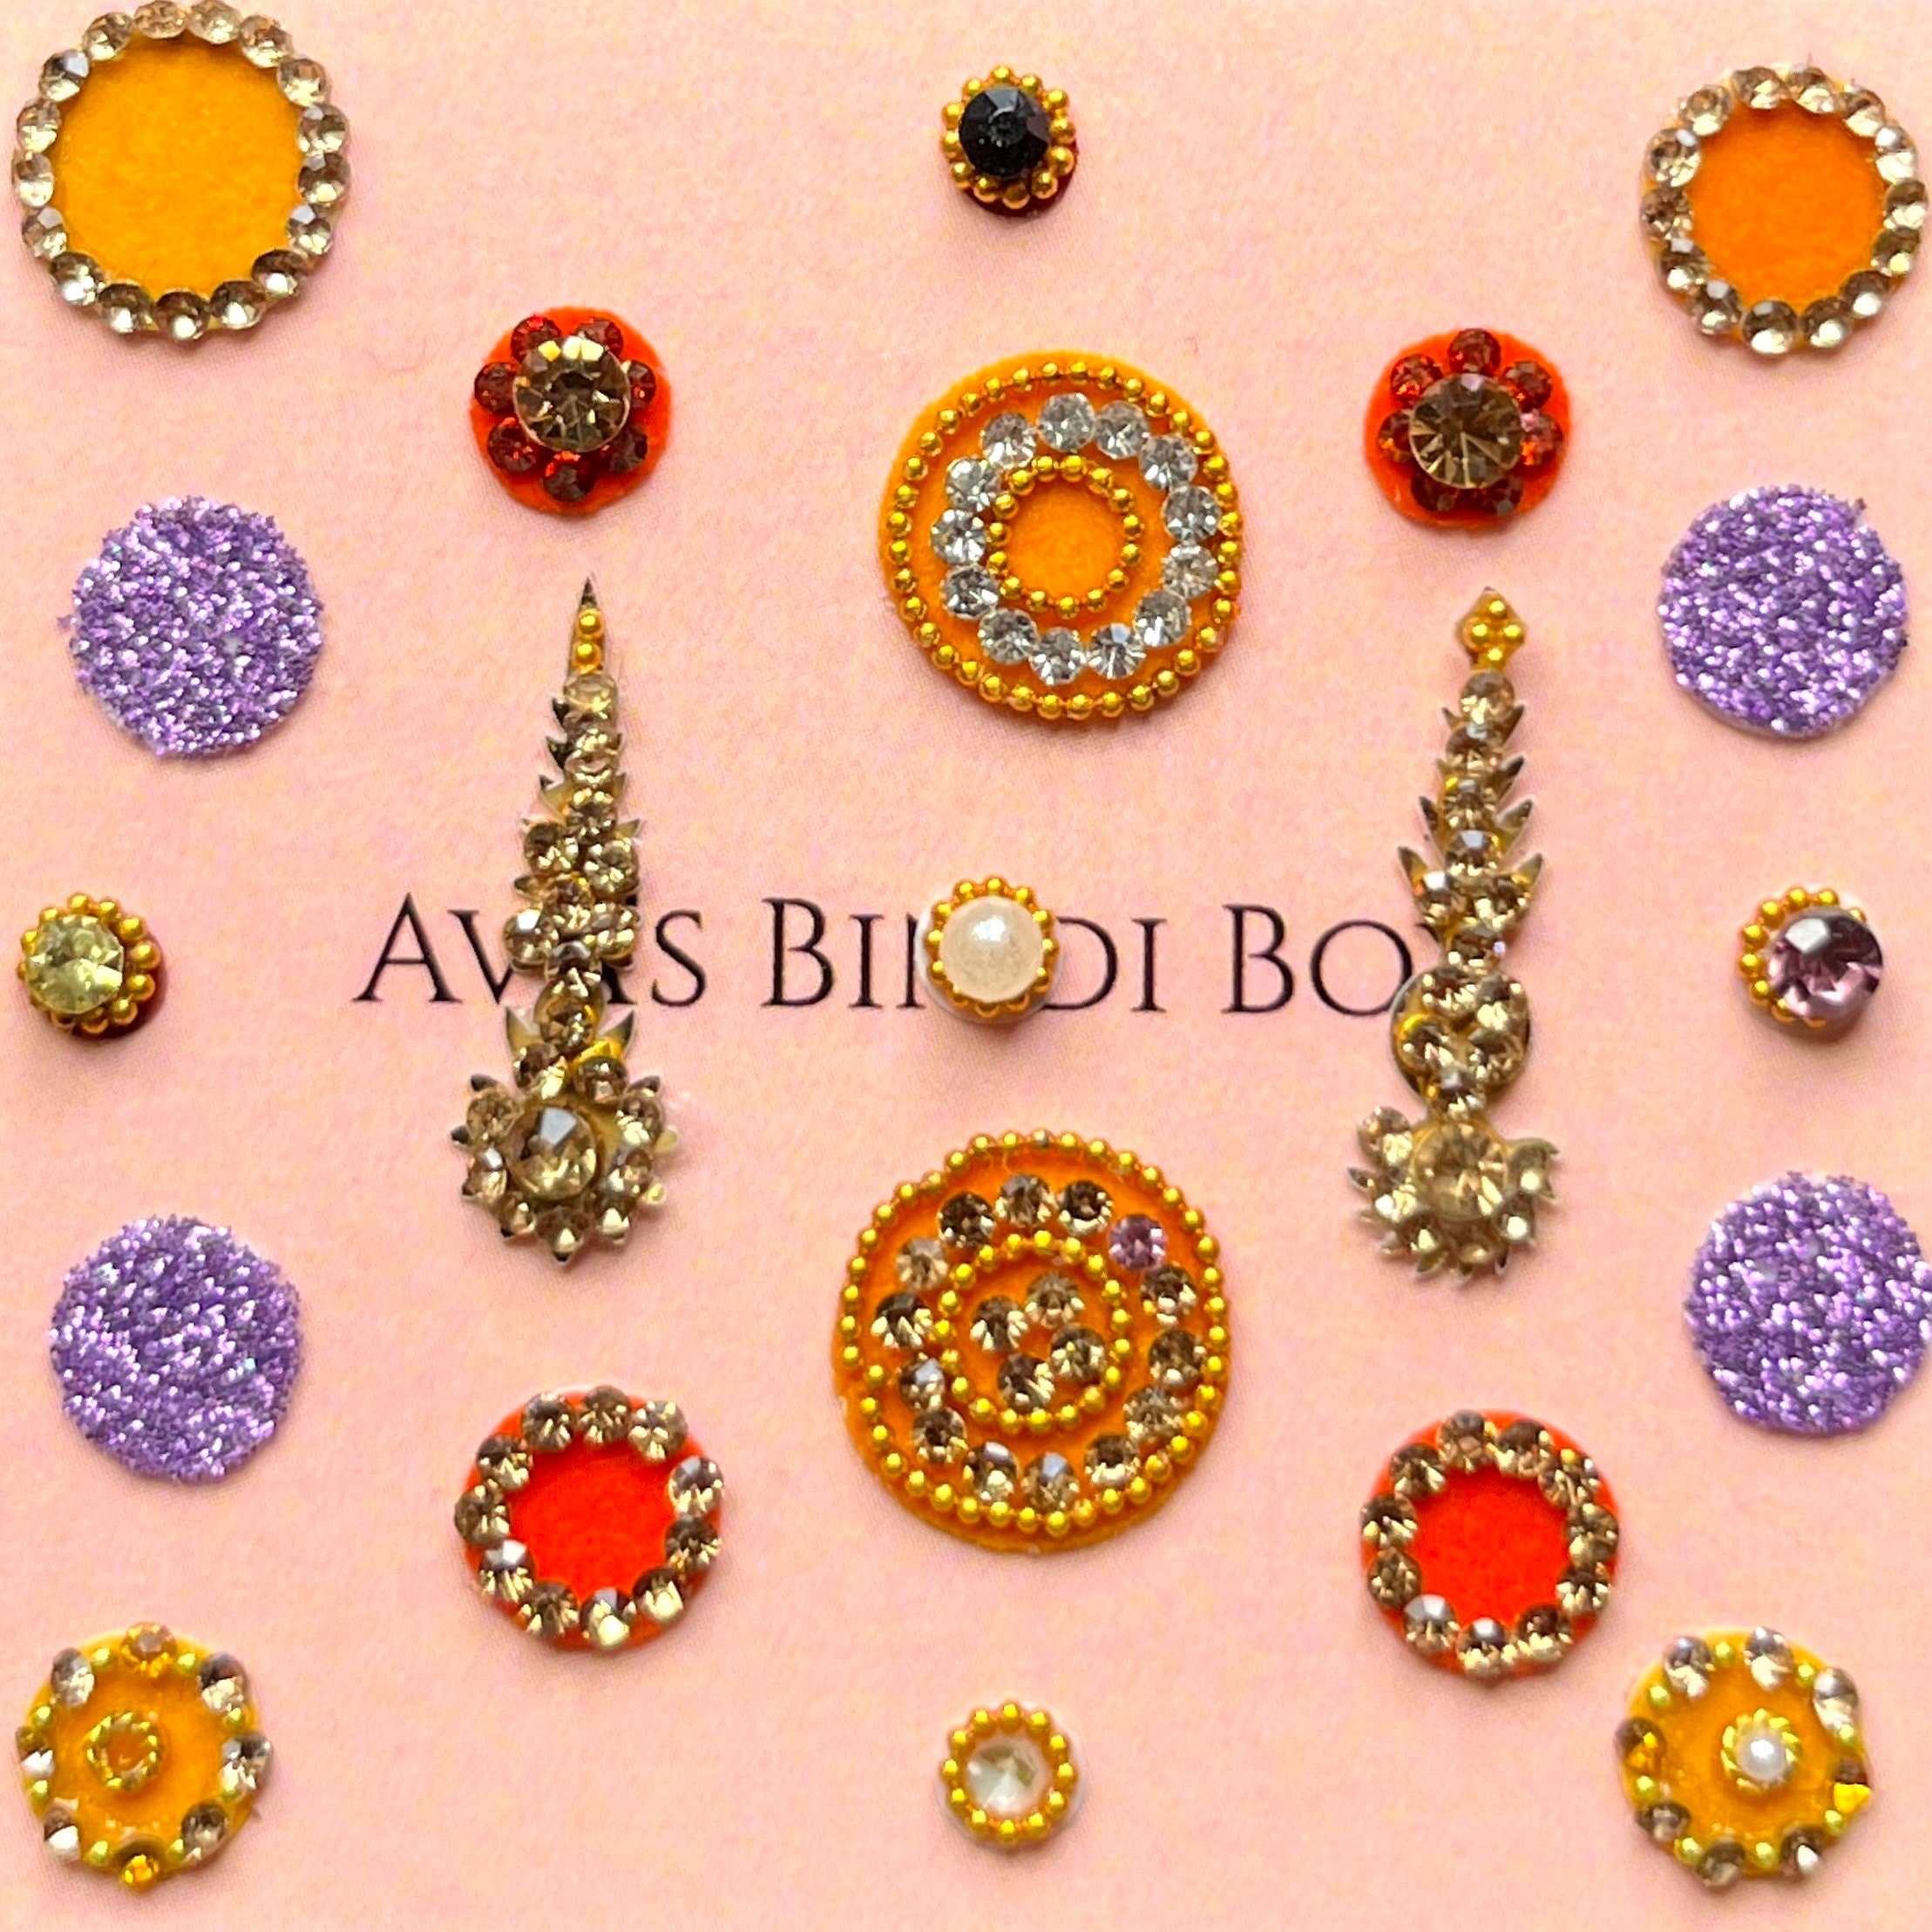 Bindi Bridal Peer Face Gems Stick Sticker Jewels Bindi Dots Body Art  Festival Fashion Accessories Beautiful Birthday Party Gift 